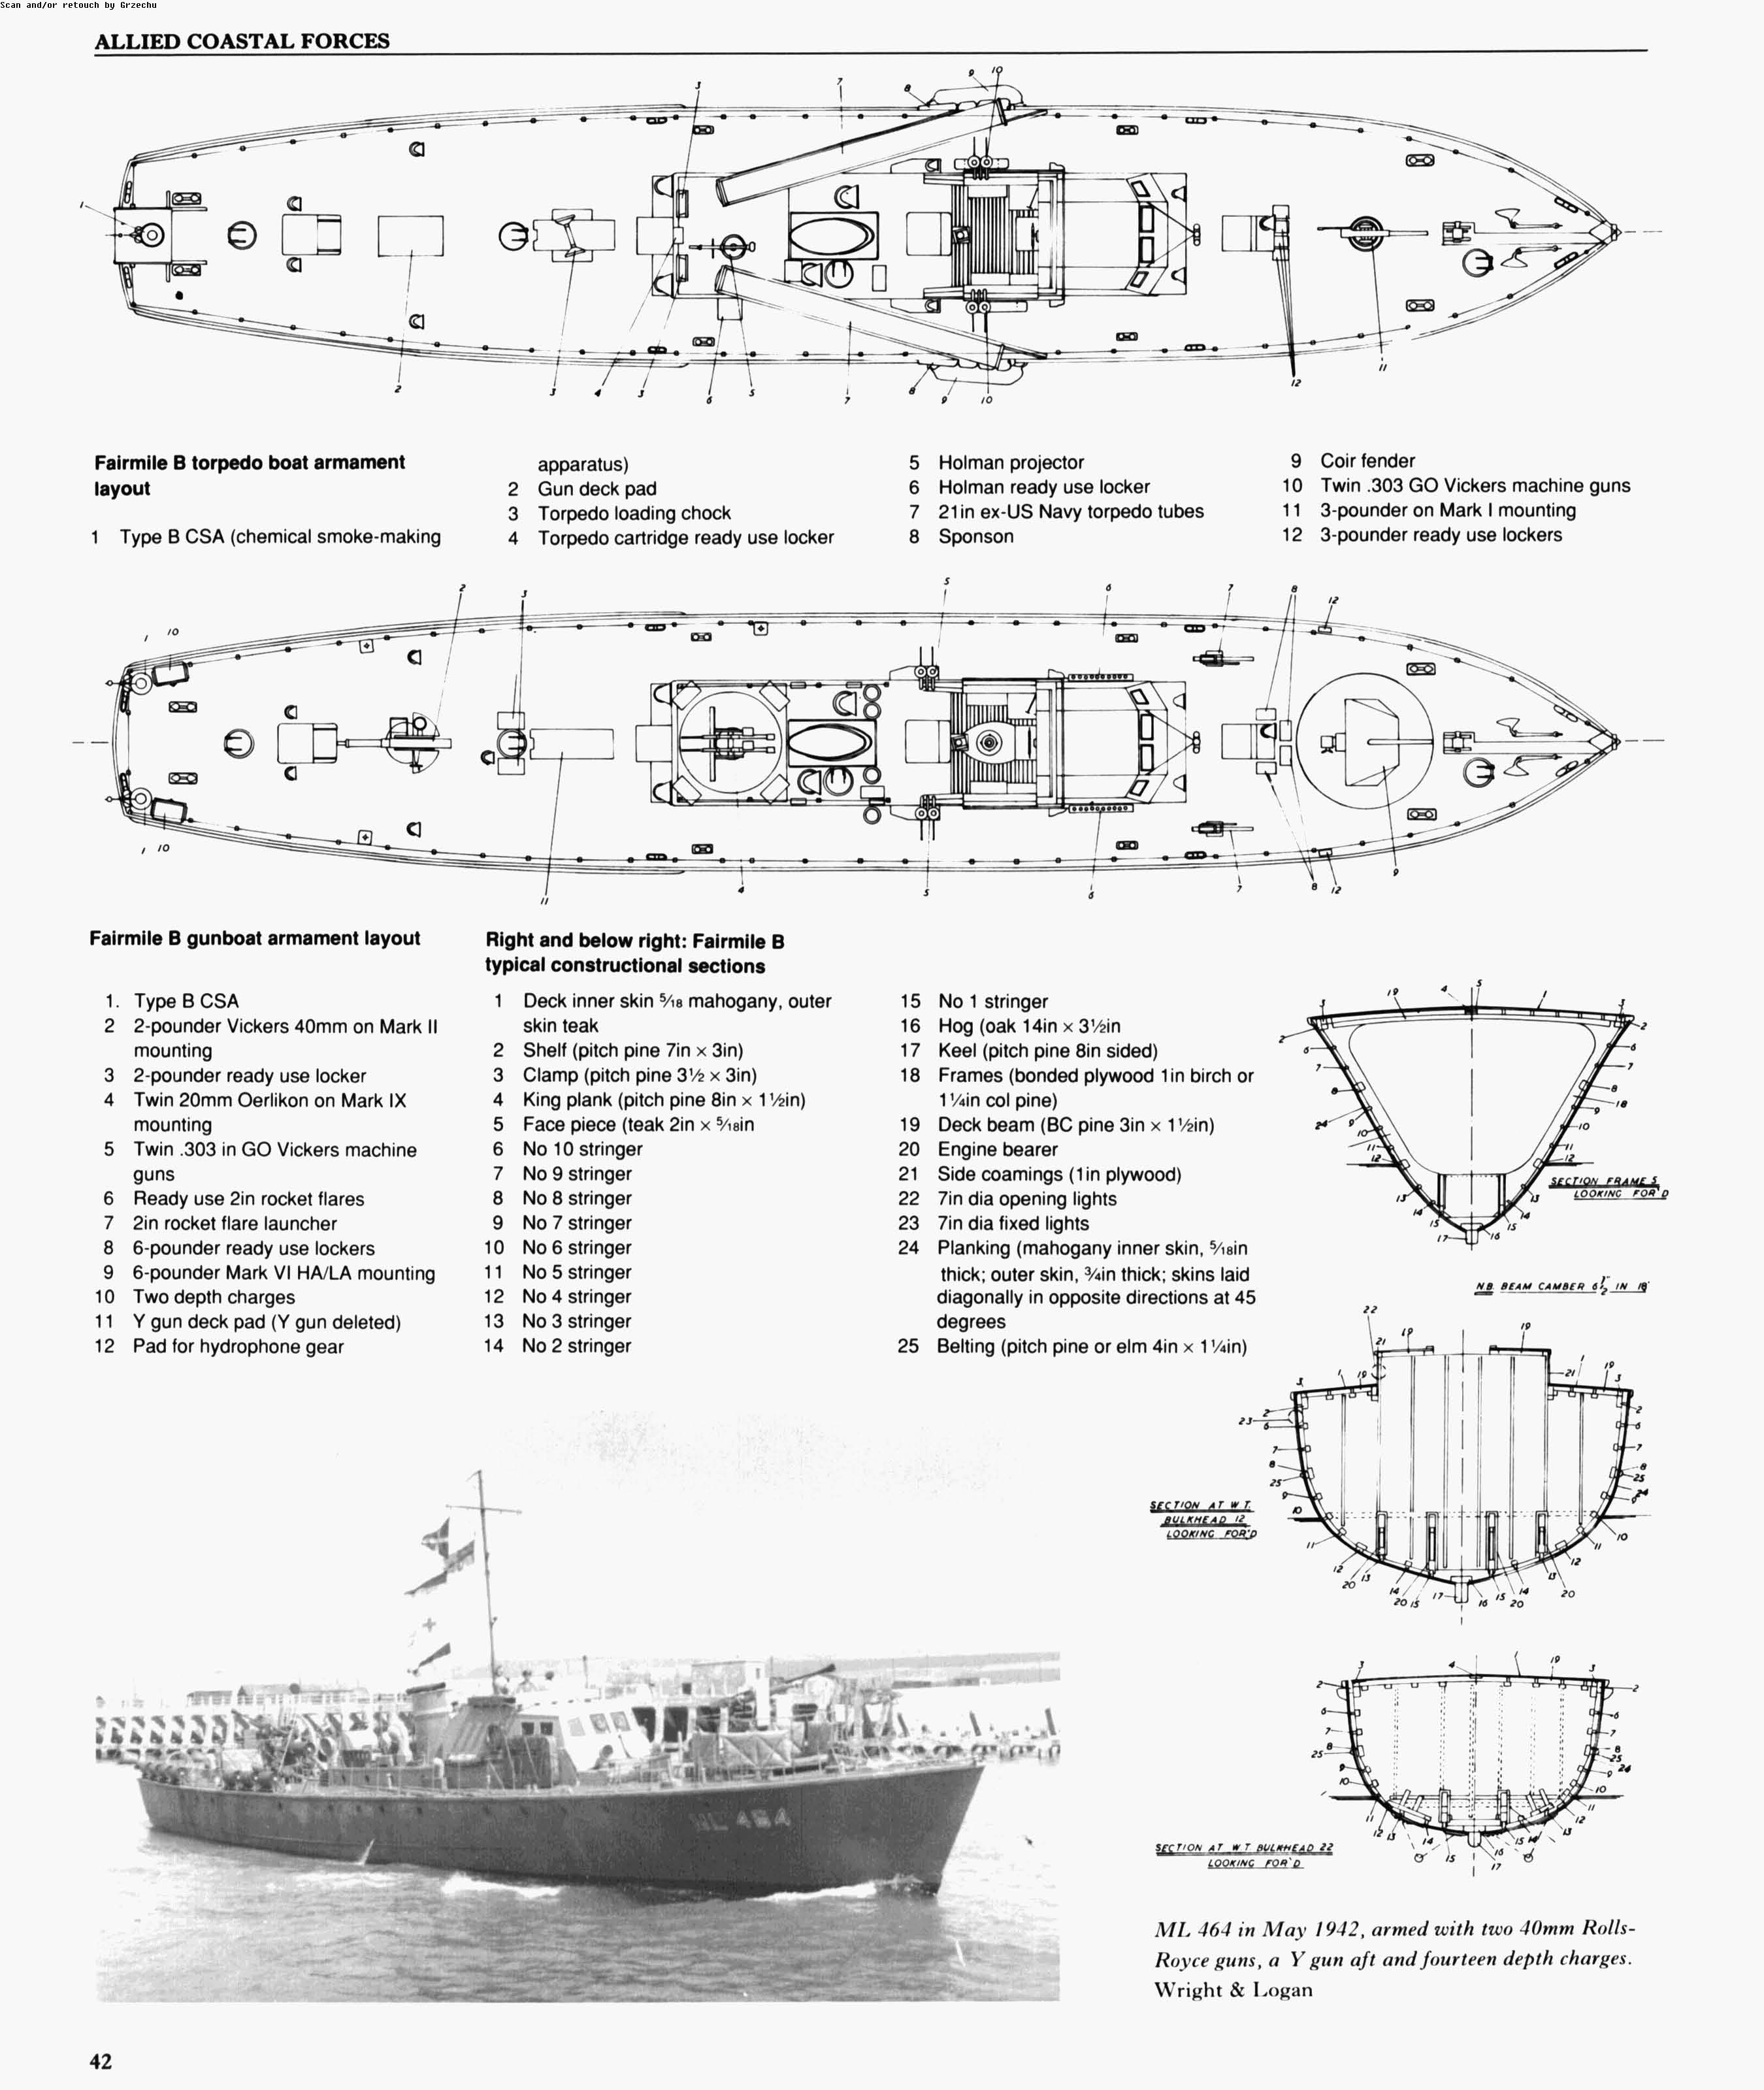 Allied Coastal Forces of World War II (1) Fairmile designs & U.S. submarine chasers_Page_044.jpg